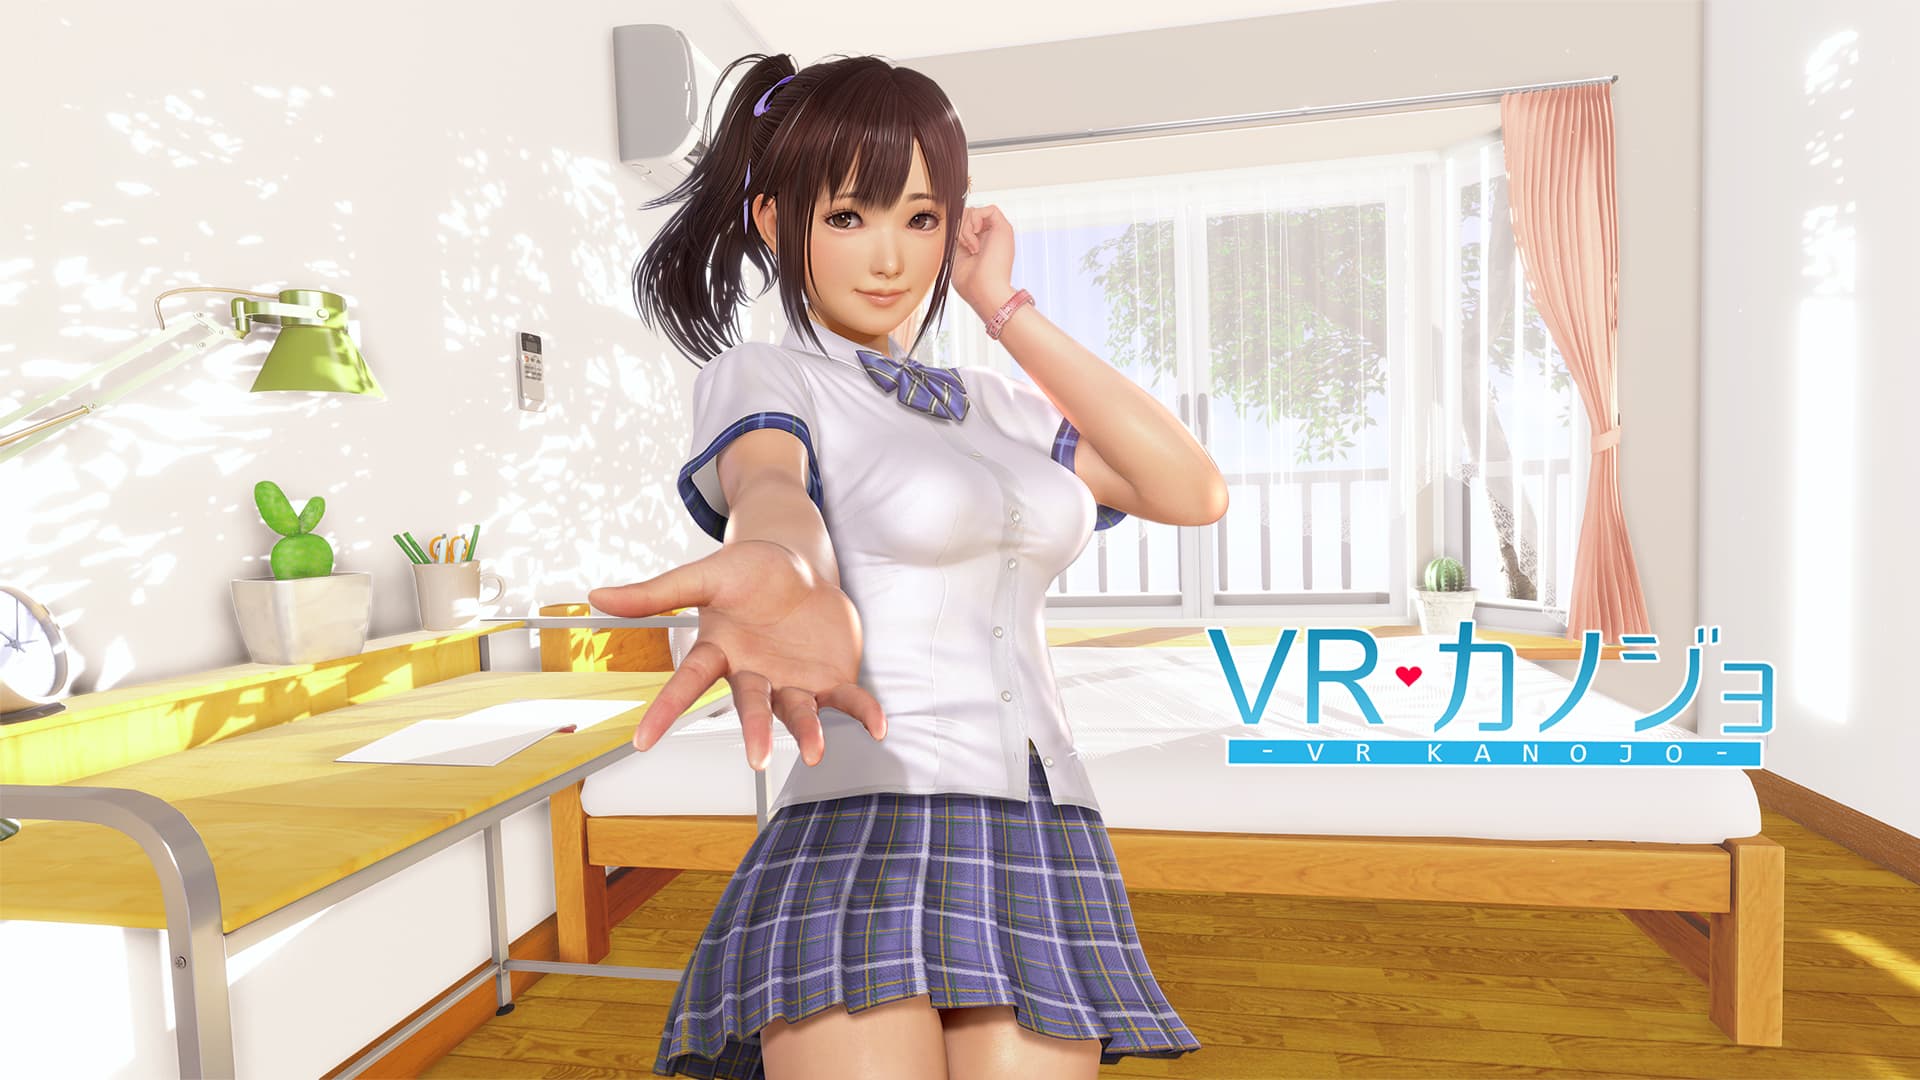 VRKanojo Review vr porn game cgi 3D vr sex simulator